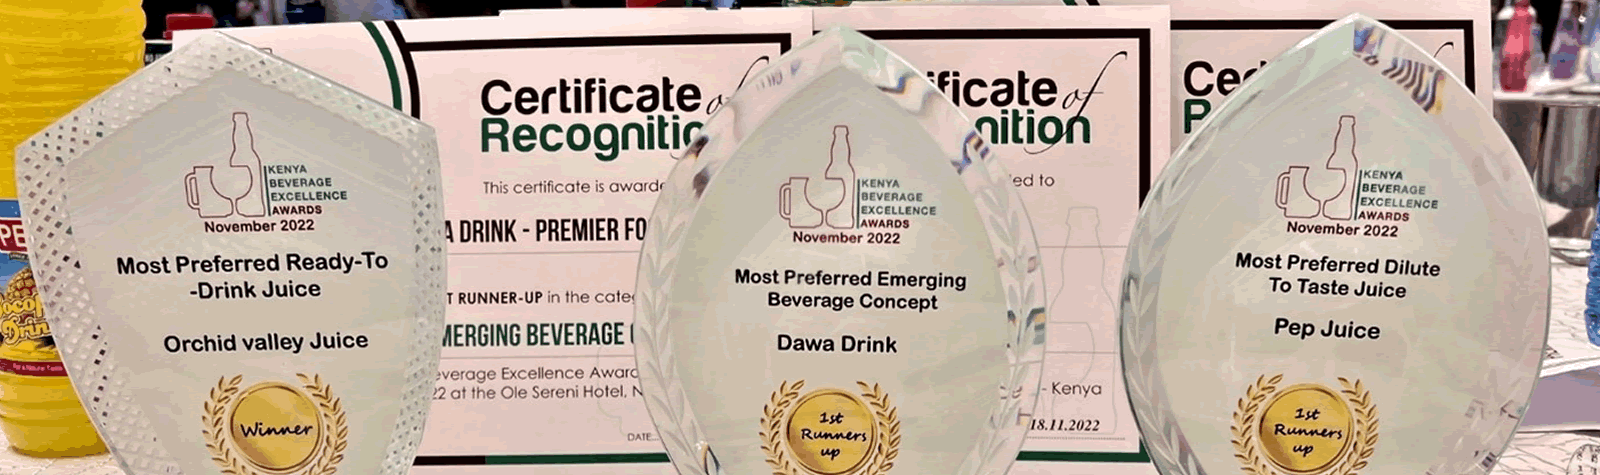 Premier Foods Ltd. bags 4 awards at the East Africa Brand Quality and Kenya Beverage Awards